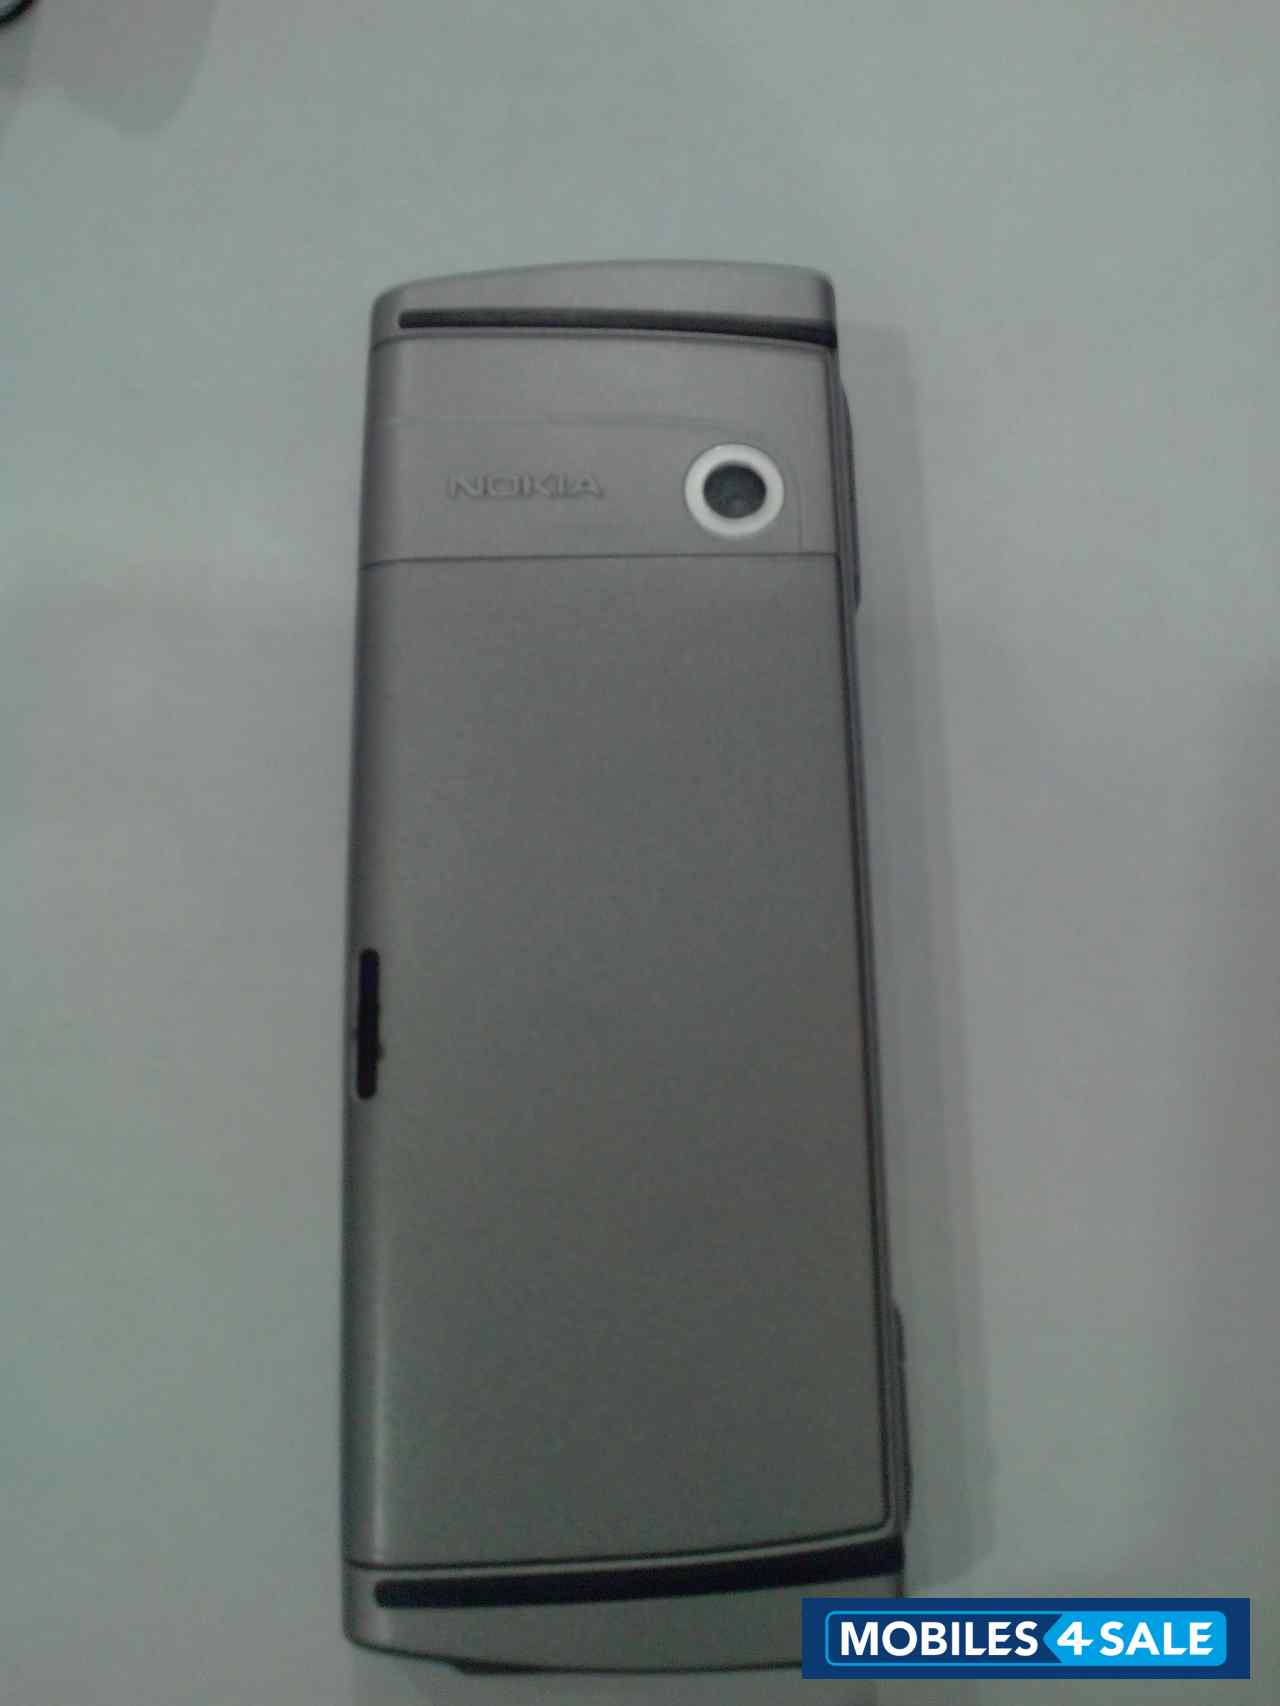 Grey / Black Nokia 9500 Communicator